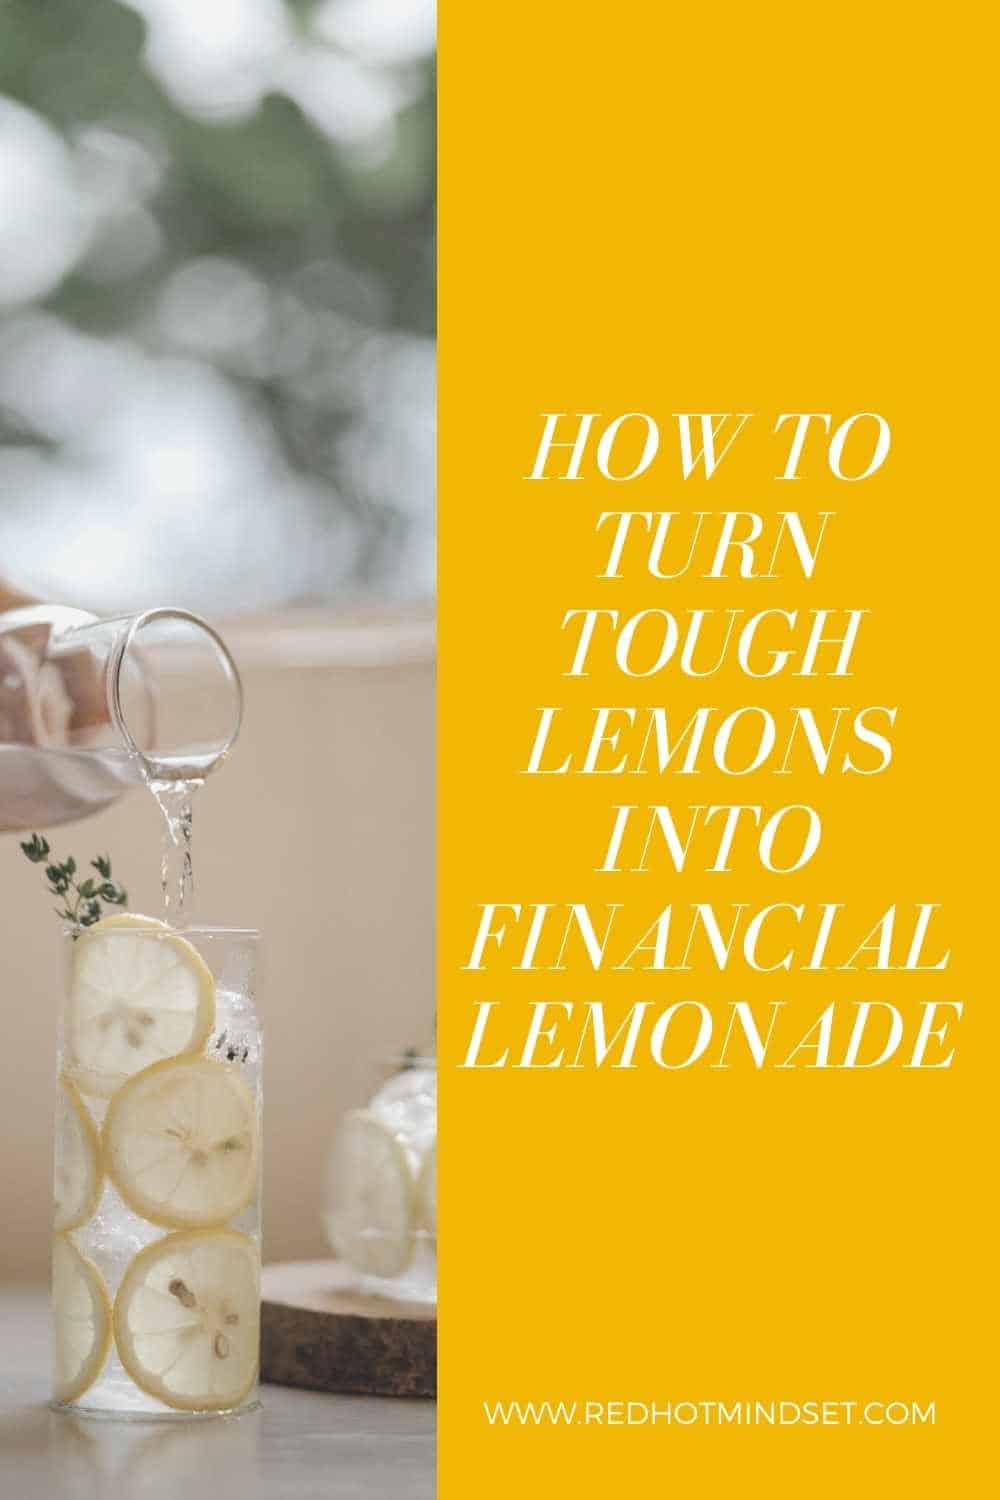 Turning a Cancerous Lemon into Financial Lemonade